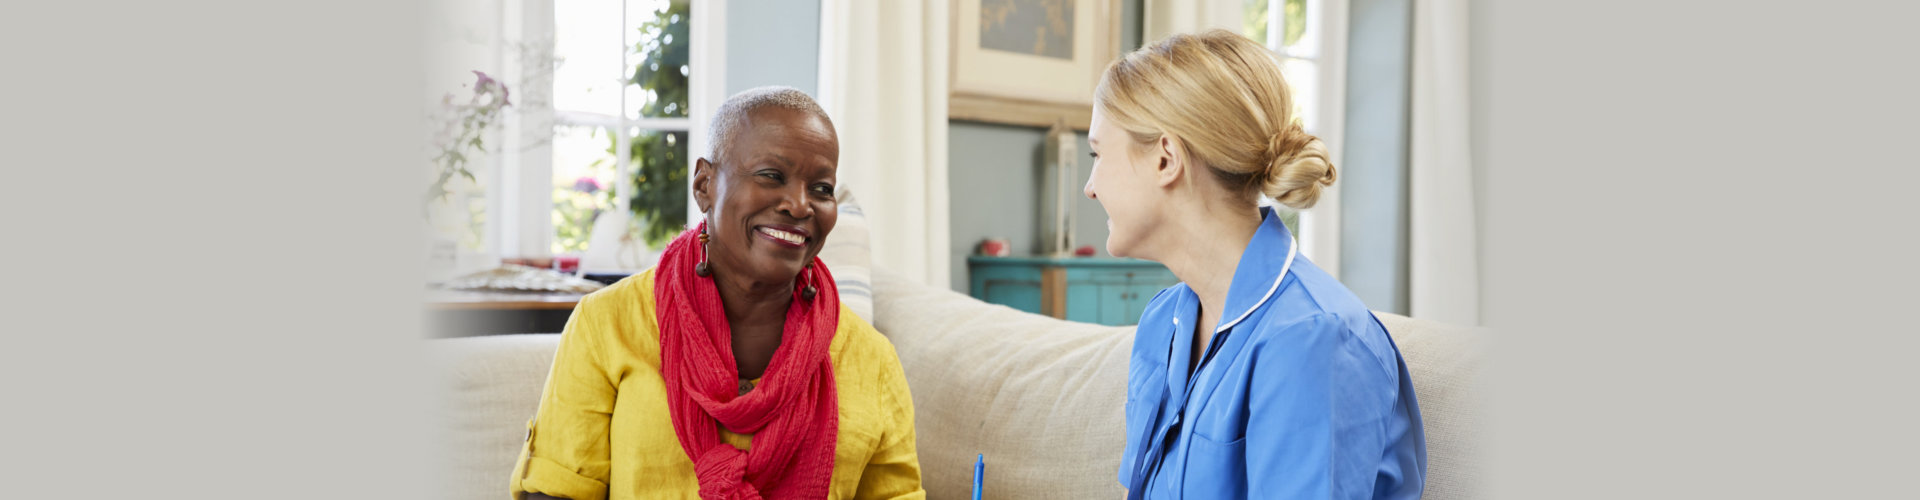 female community nurse visits senior woman at home